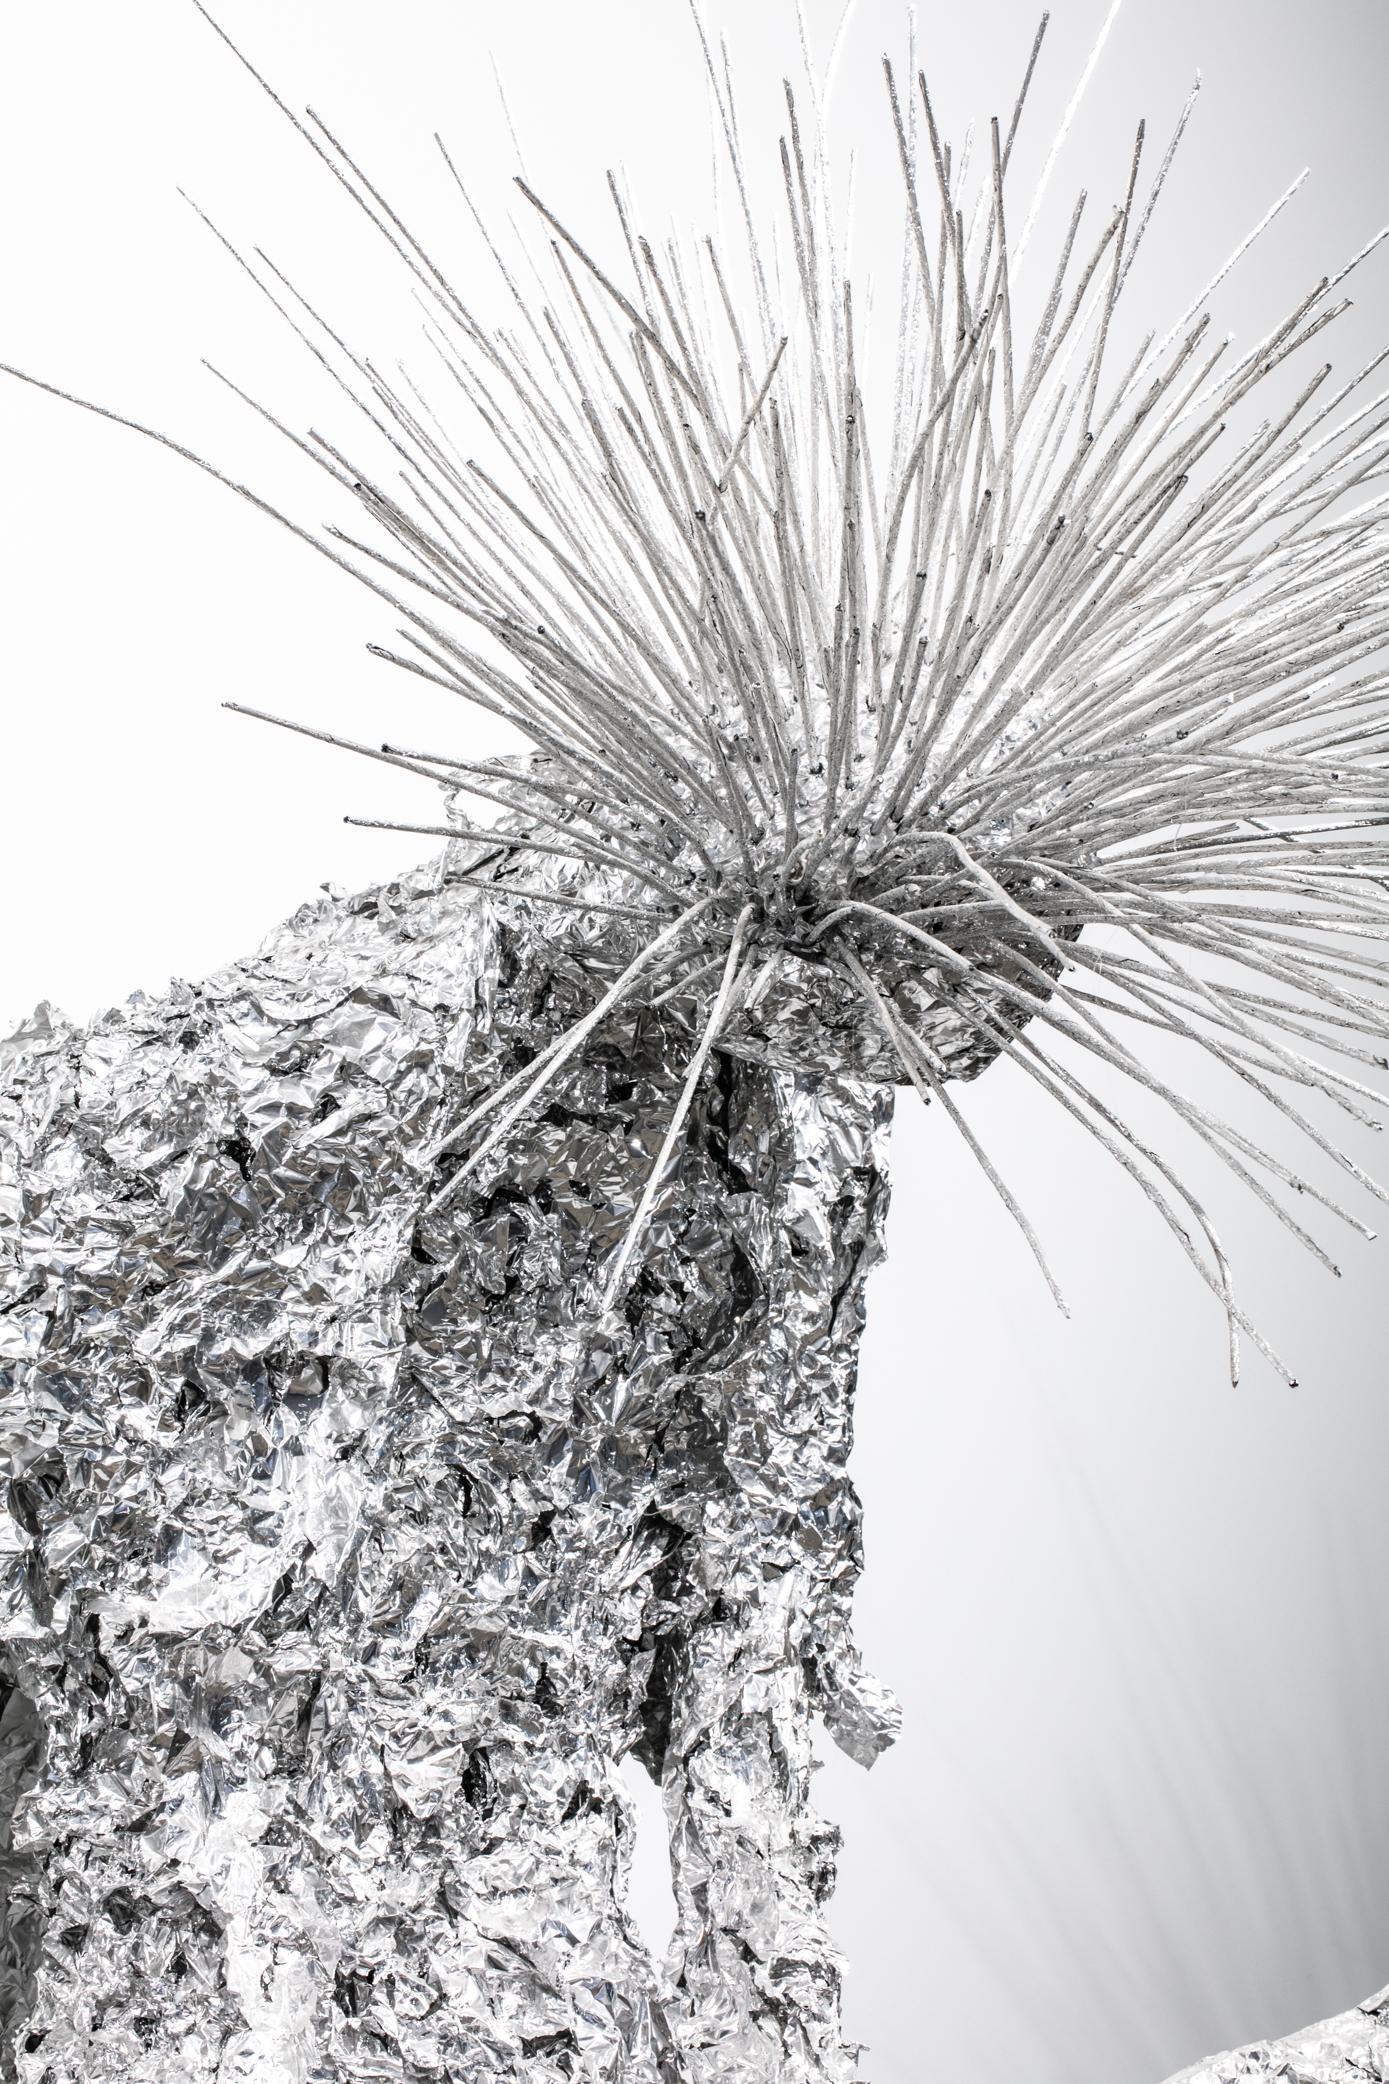 Untitled - Sculpture by Tom Friedman